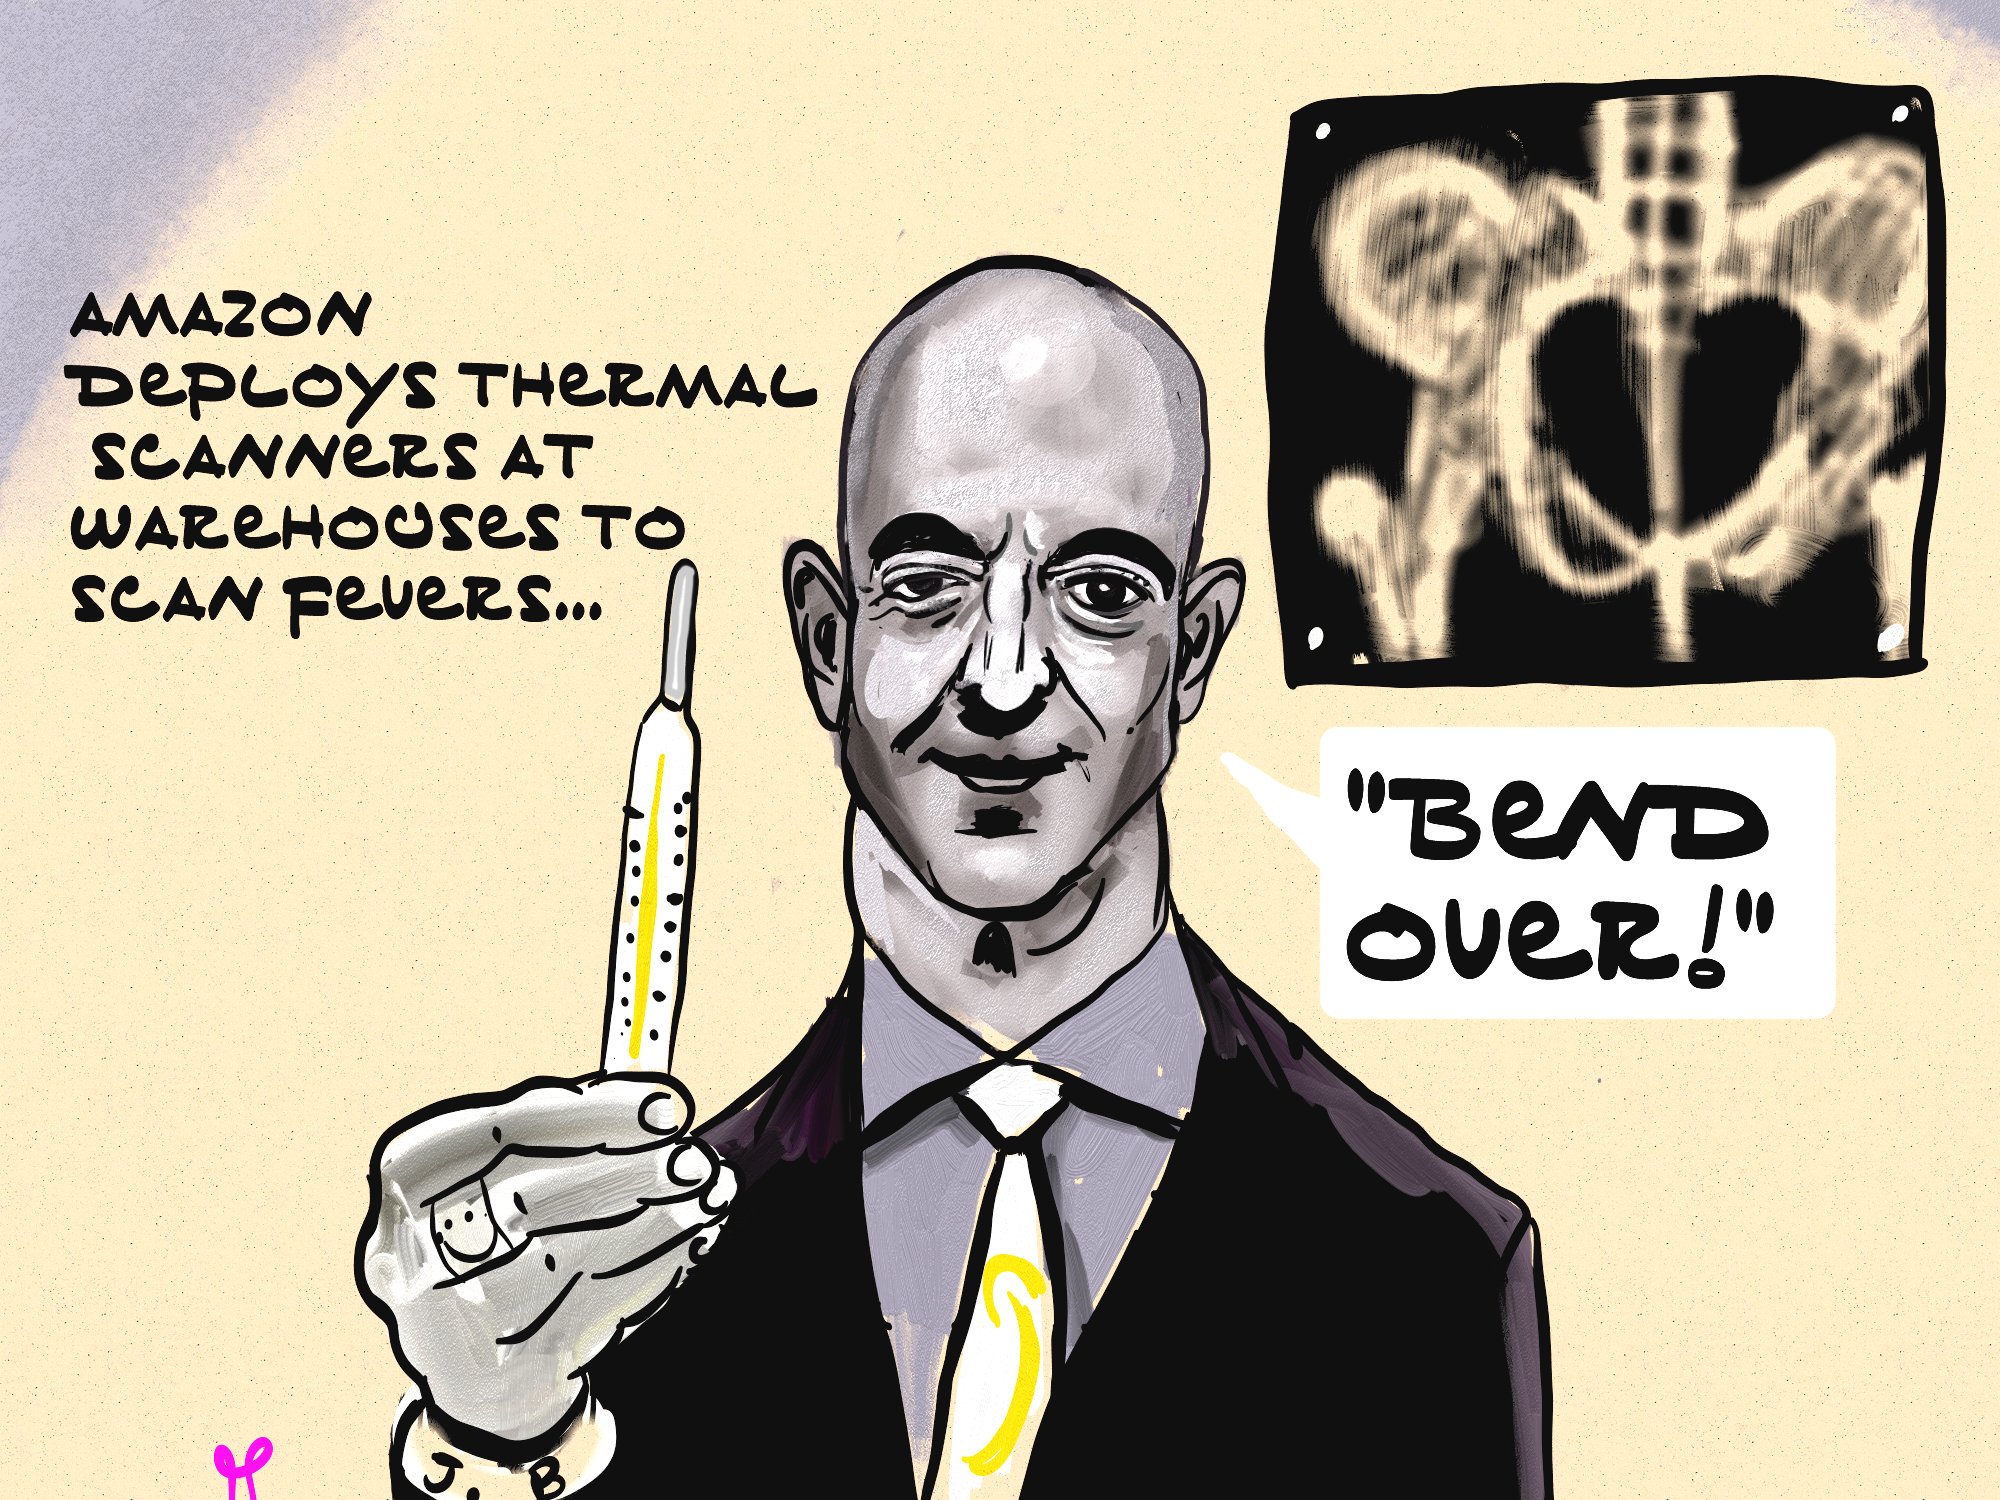 Jeff Bezos Amazon Warehouse Thermal Scanners Political Cartoon for President Donald Trump. Matt Drudge Report. post thumbnail image